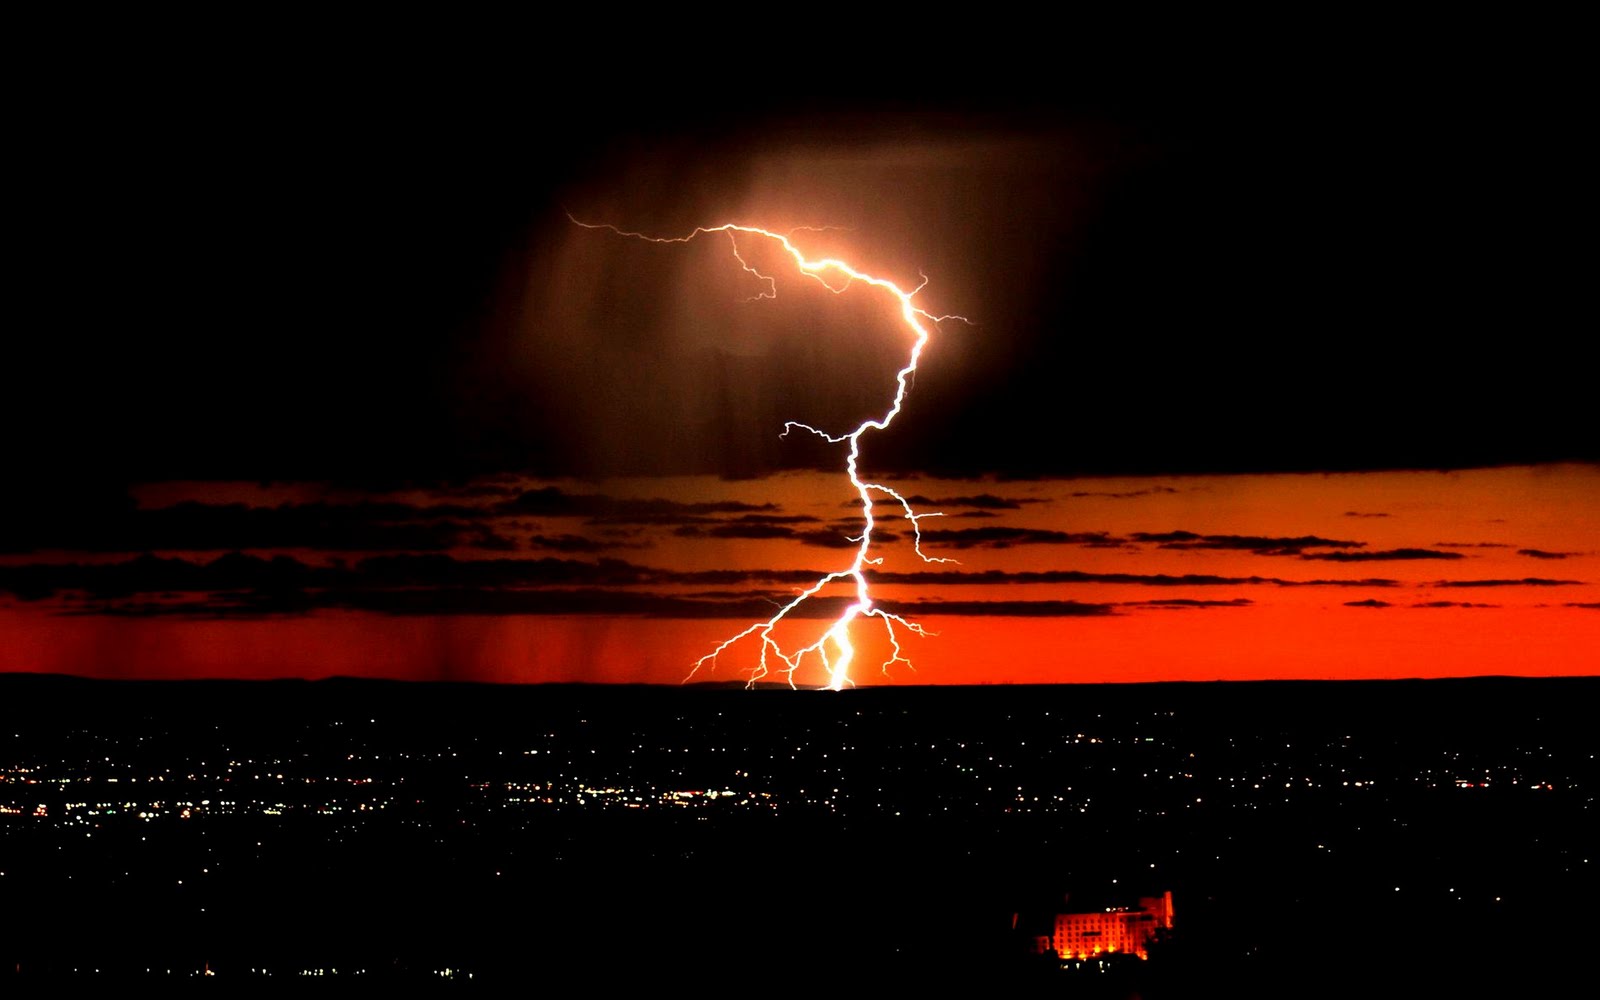 Red Lightning Pictures  Download Free Images on Unsplash